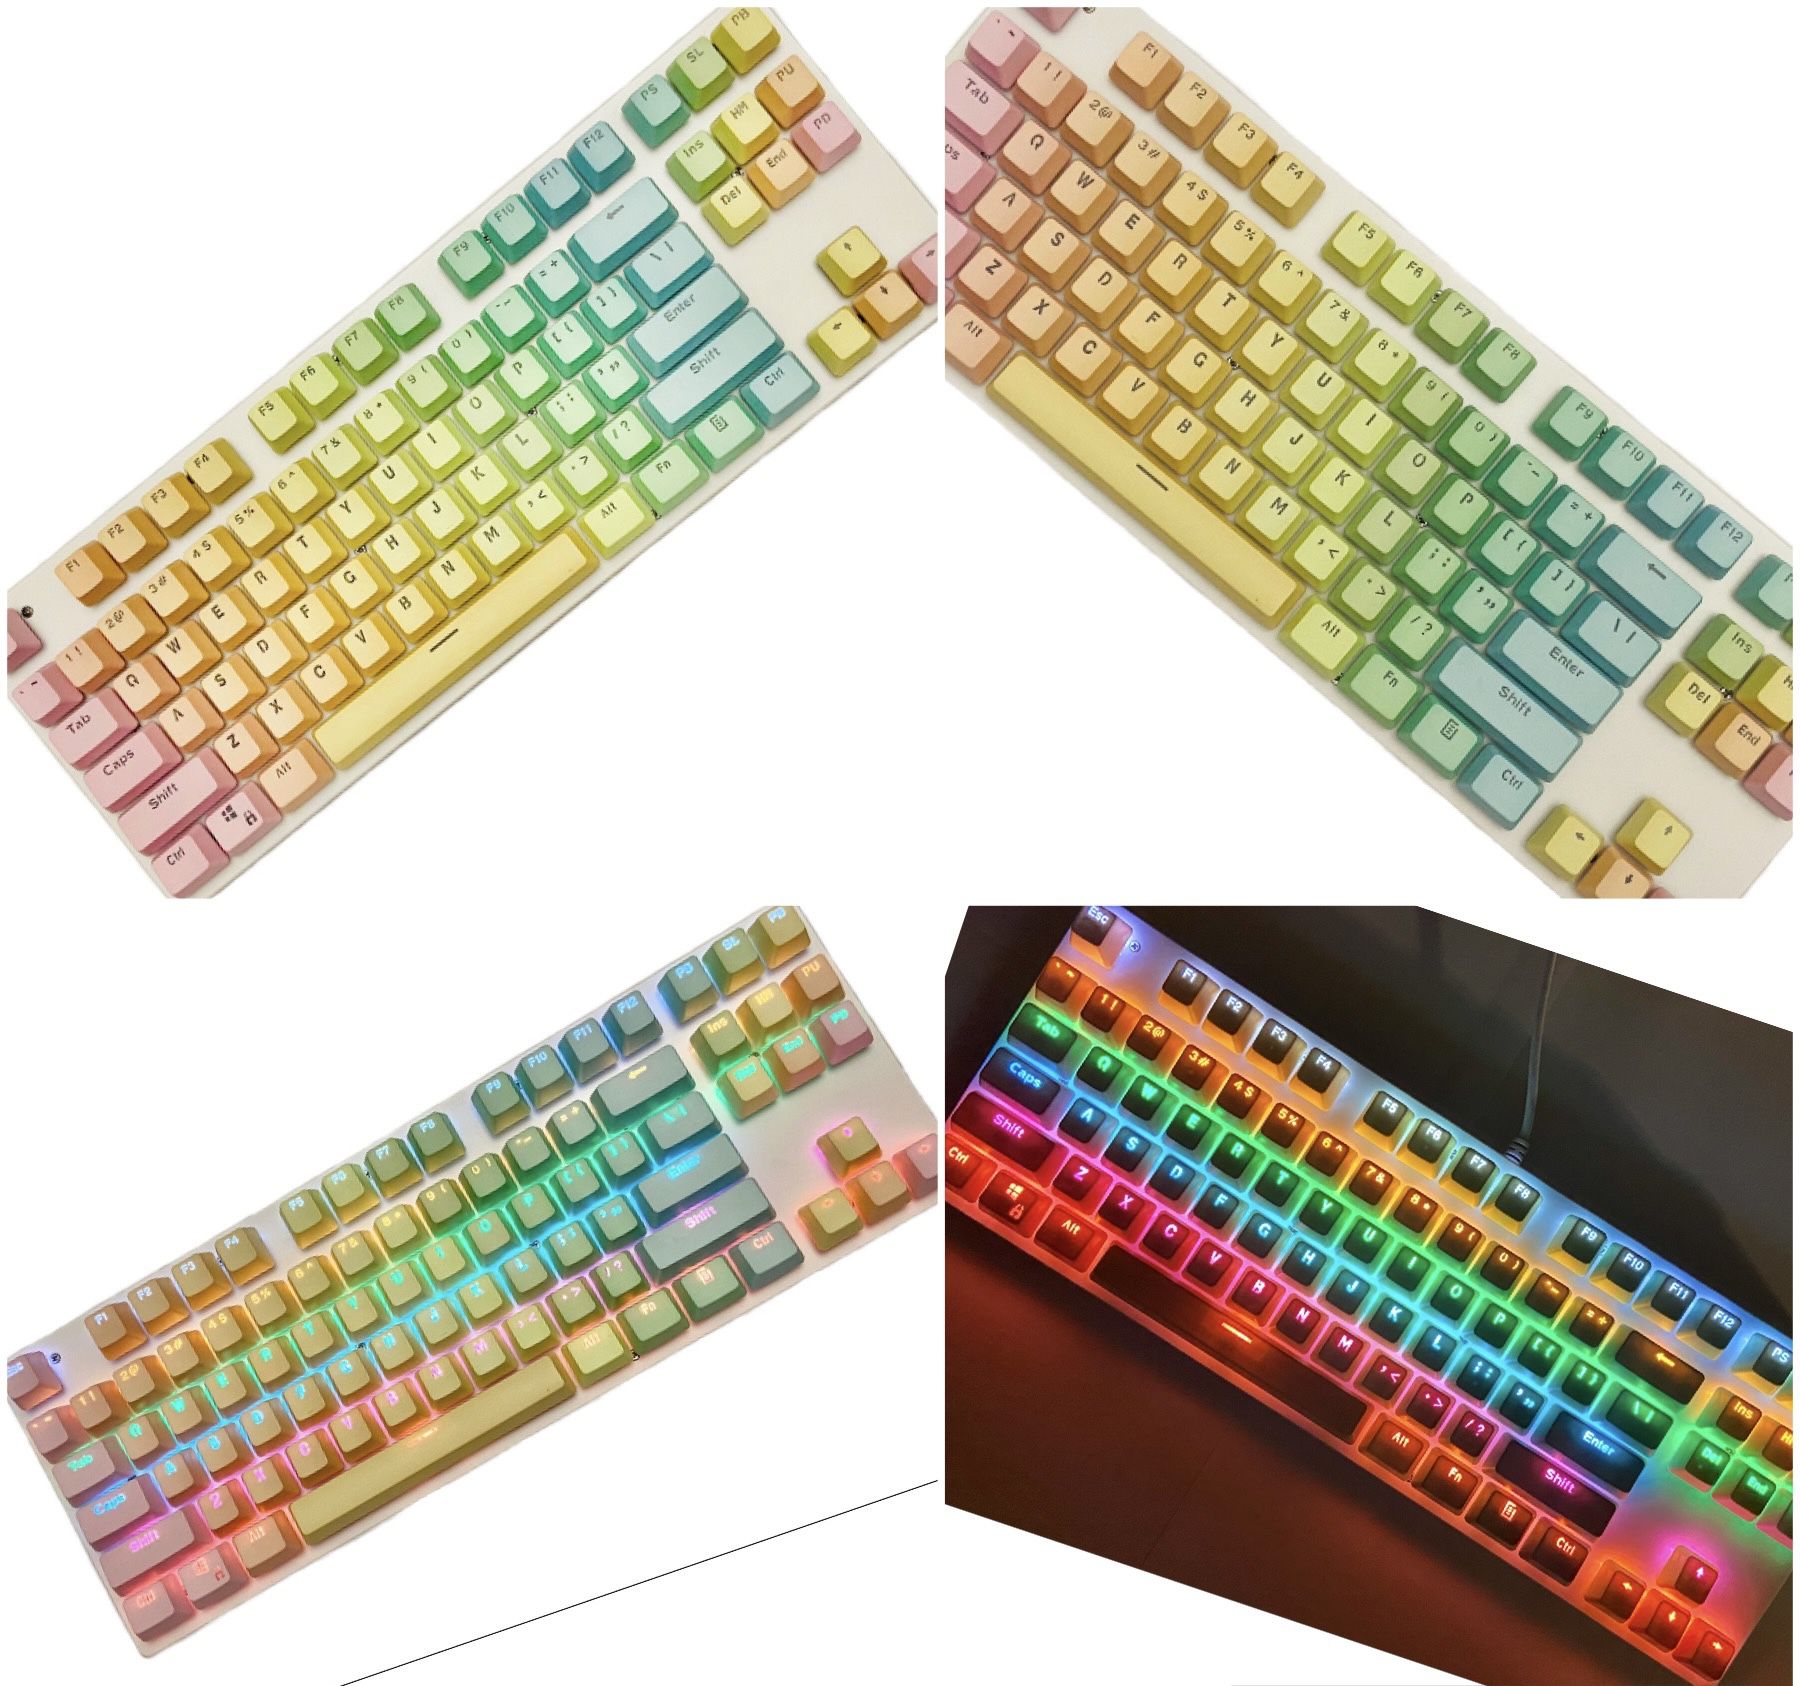 Rainbow Ombré Fade Key Caps Mechanical Gaming Keyboard with RGB LED Rainbow Backlit K550 New